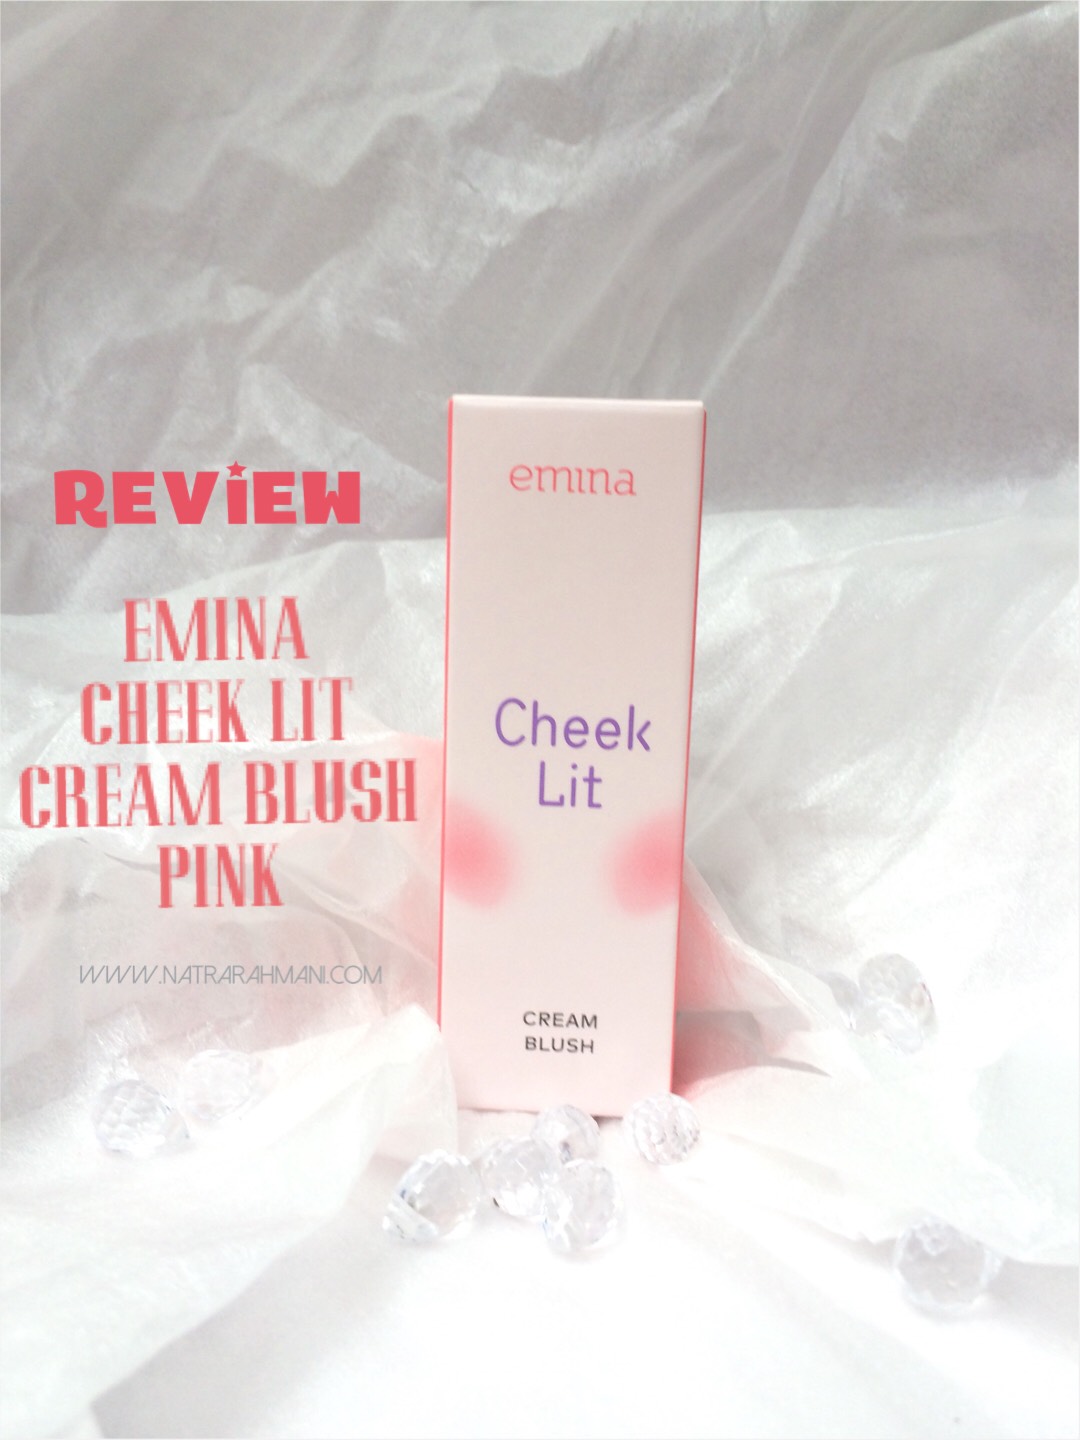 REVIEW EMINA CHEEK LIT CREAM BLUSH PINK / Natrarahmani